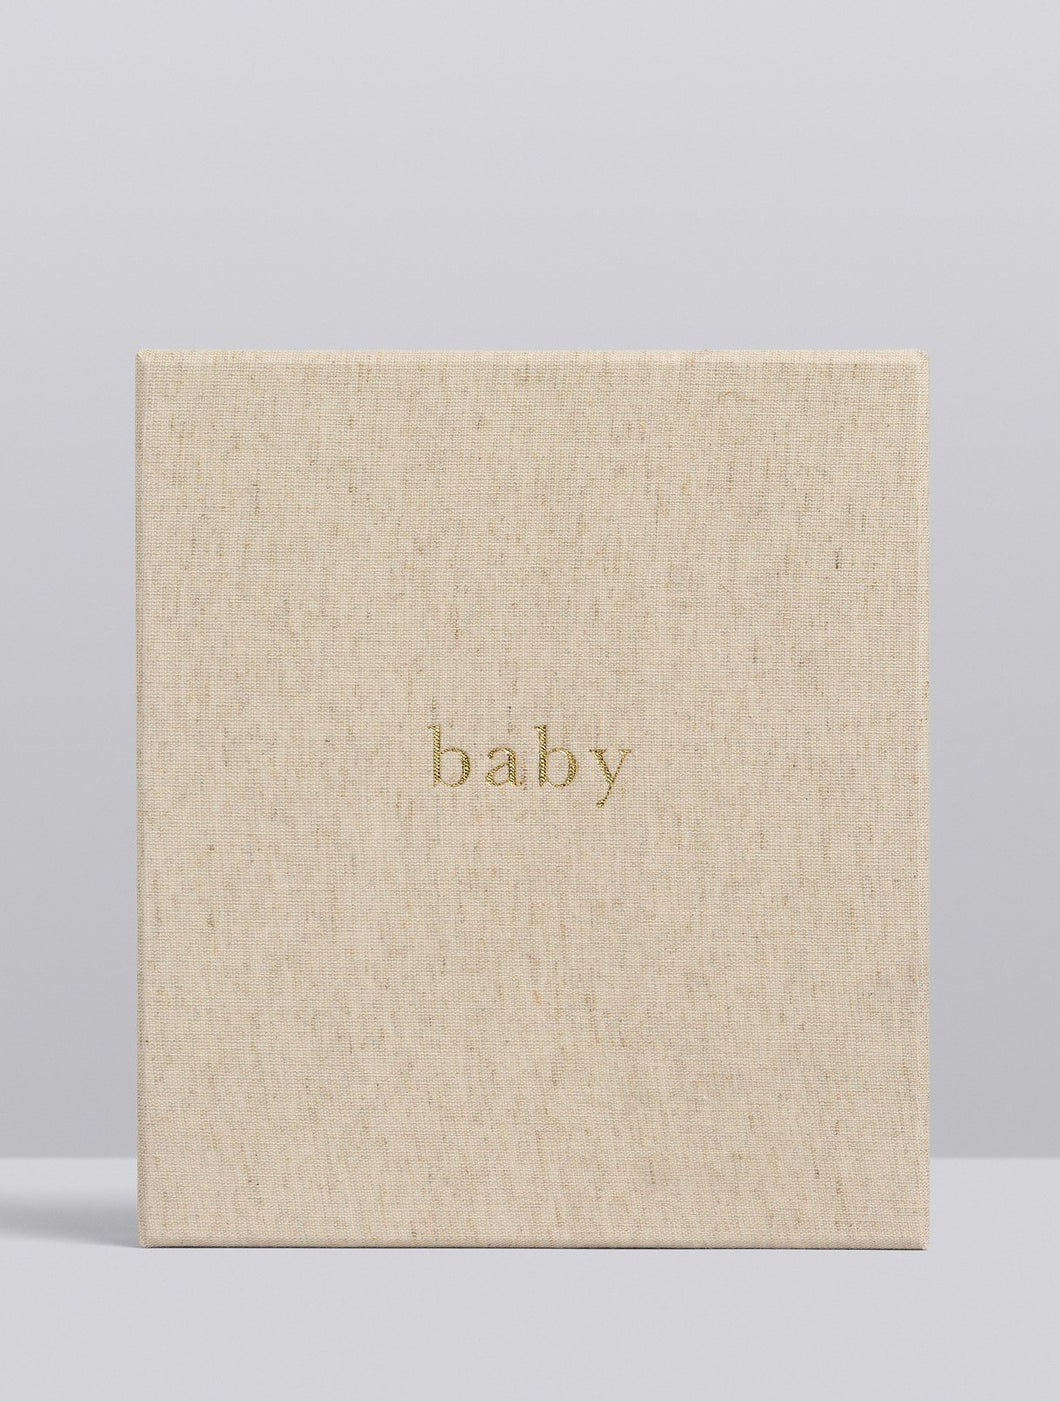 Baby Book with Linen Keepsake Box